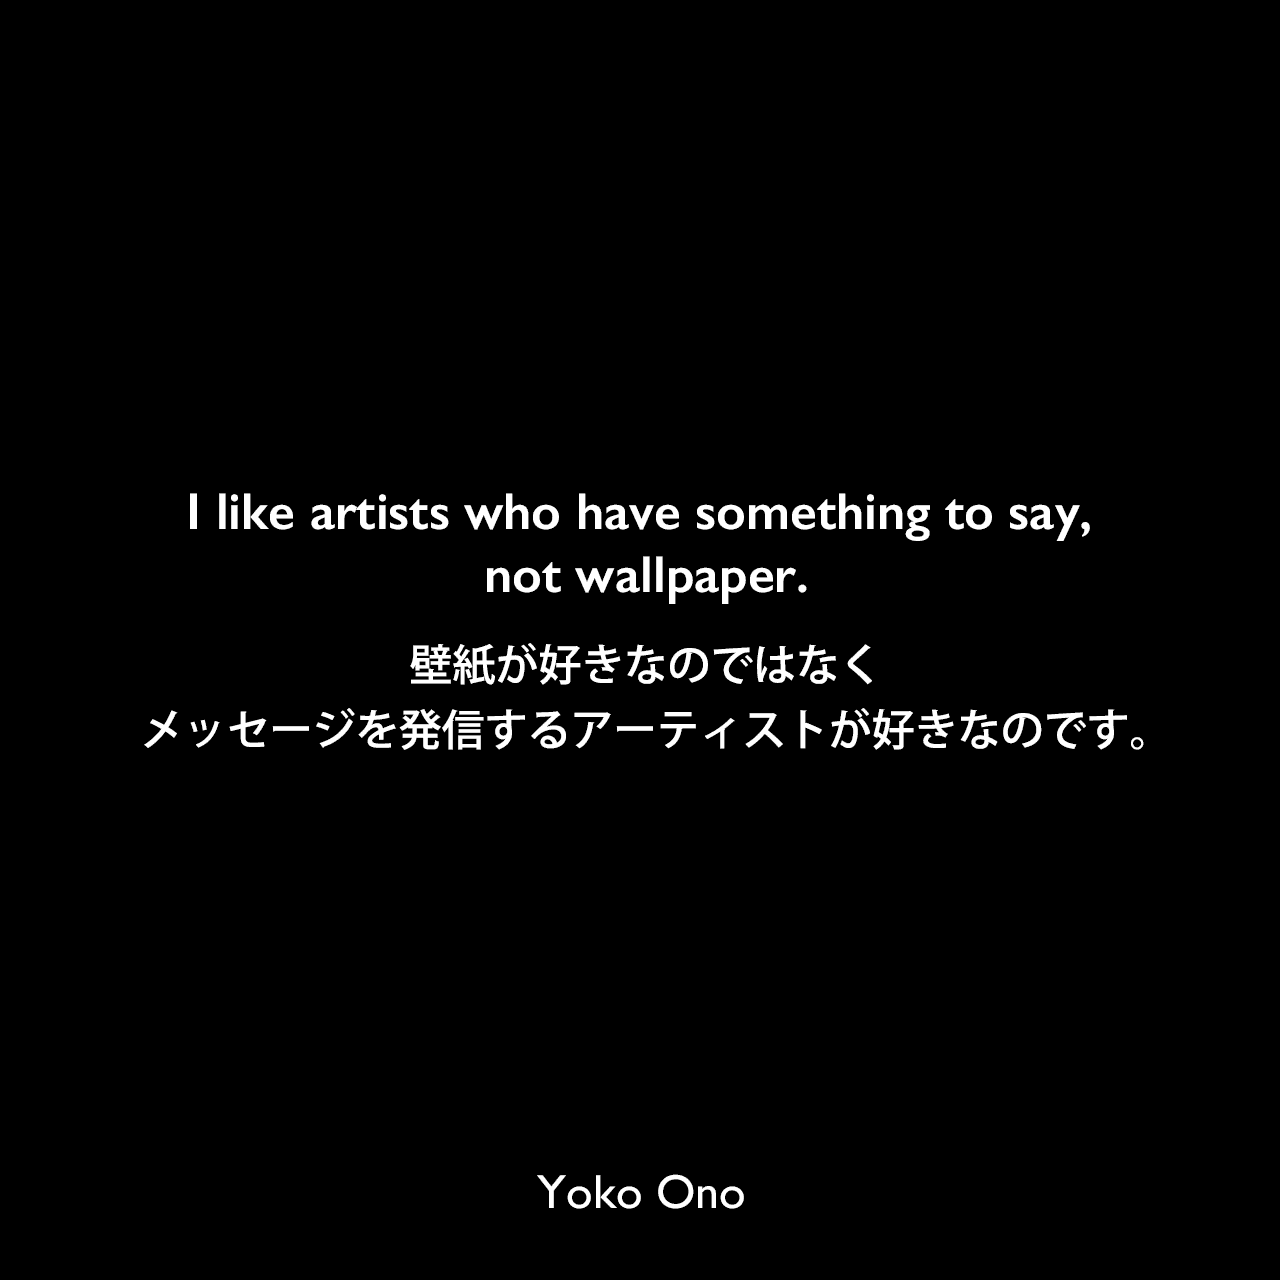 I like artists who have something to say, not wallpaper.壁紙が好きなのではなく、メッセージを発信するアーティストが好きなのです。Yoko Ono